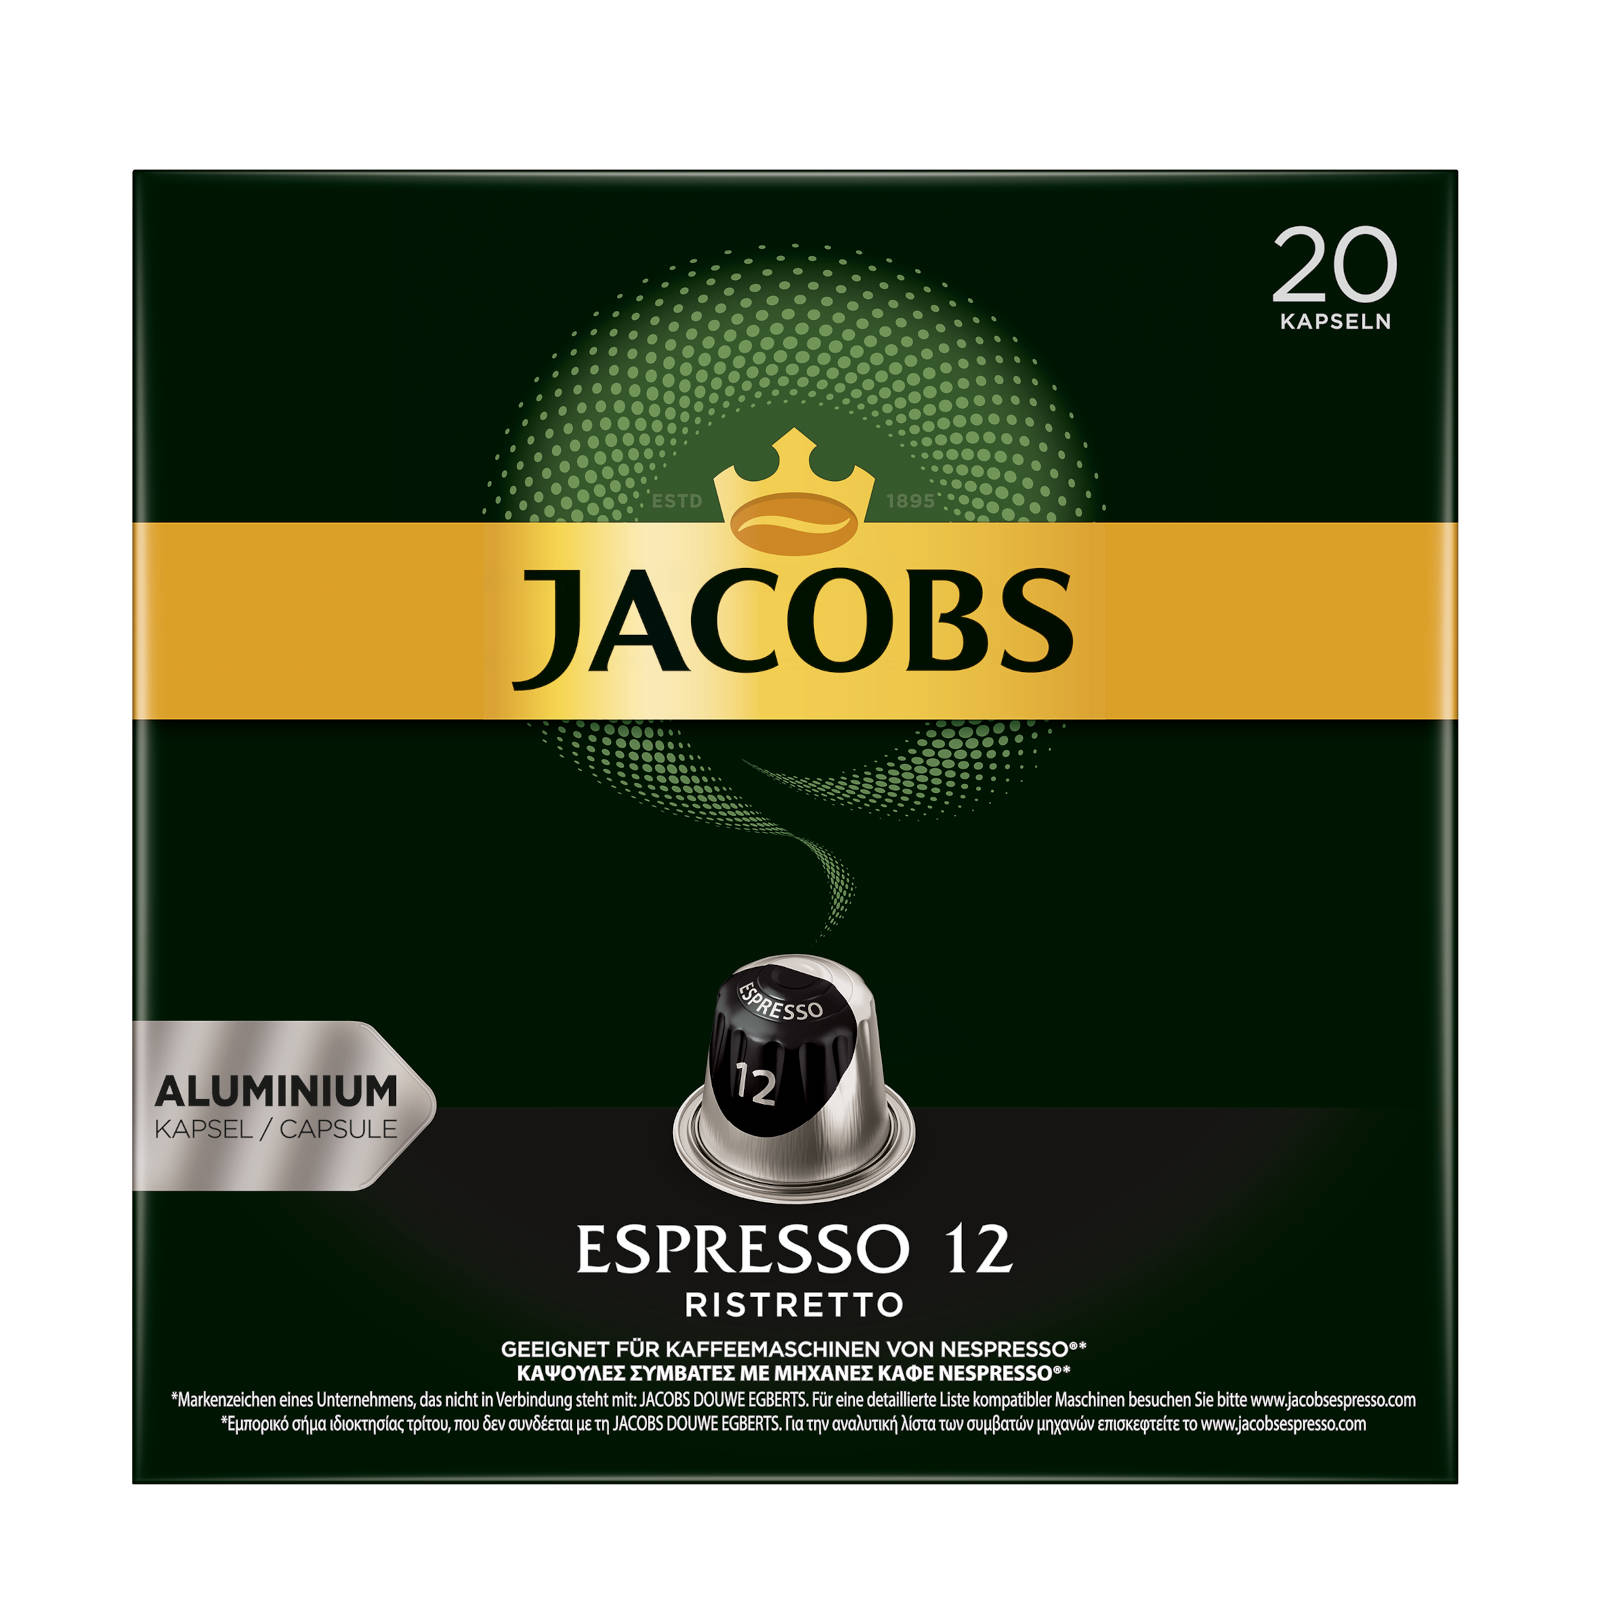 (Nespresso 12 kompatible Espresso Ristretto 20 Nespresso®* JACOBS Kaffeekapseln x 10 System)